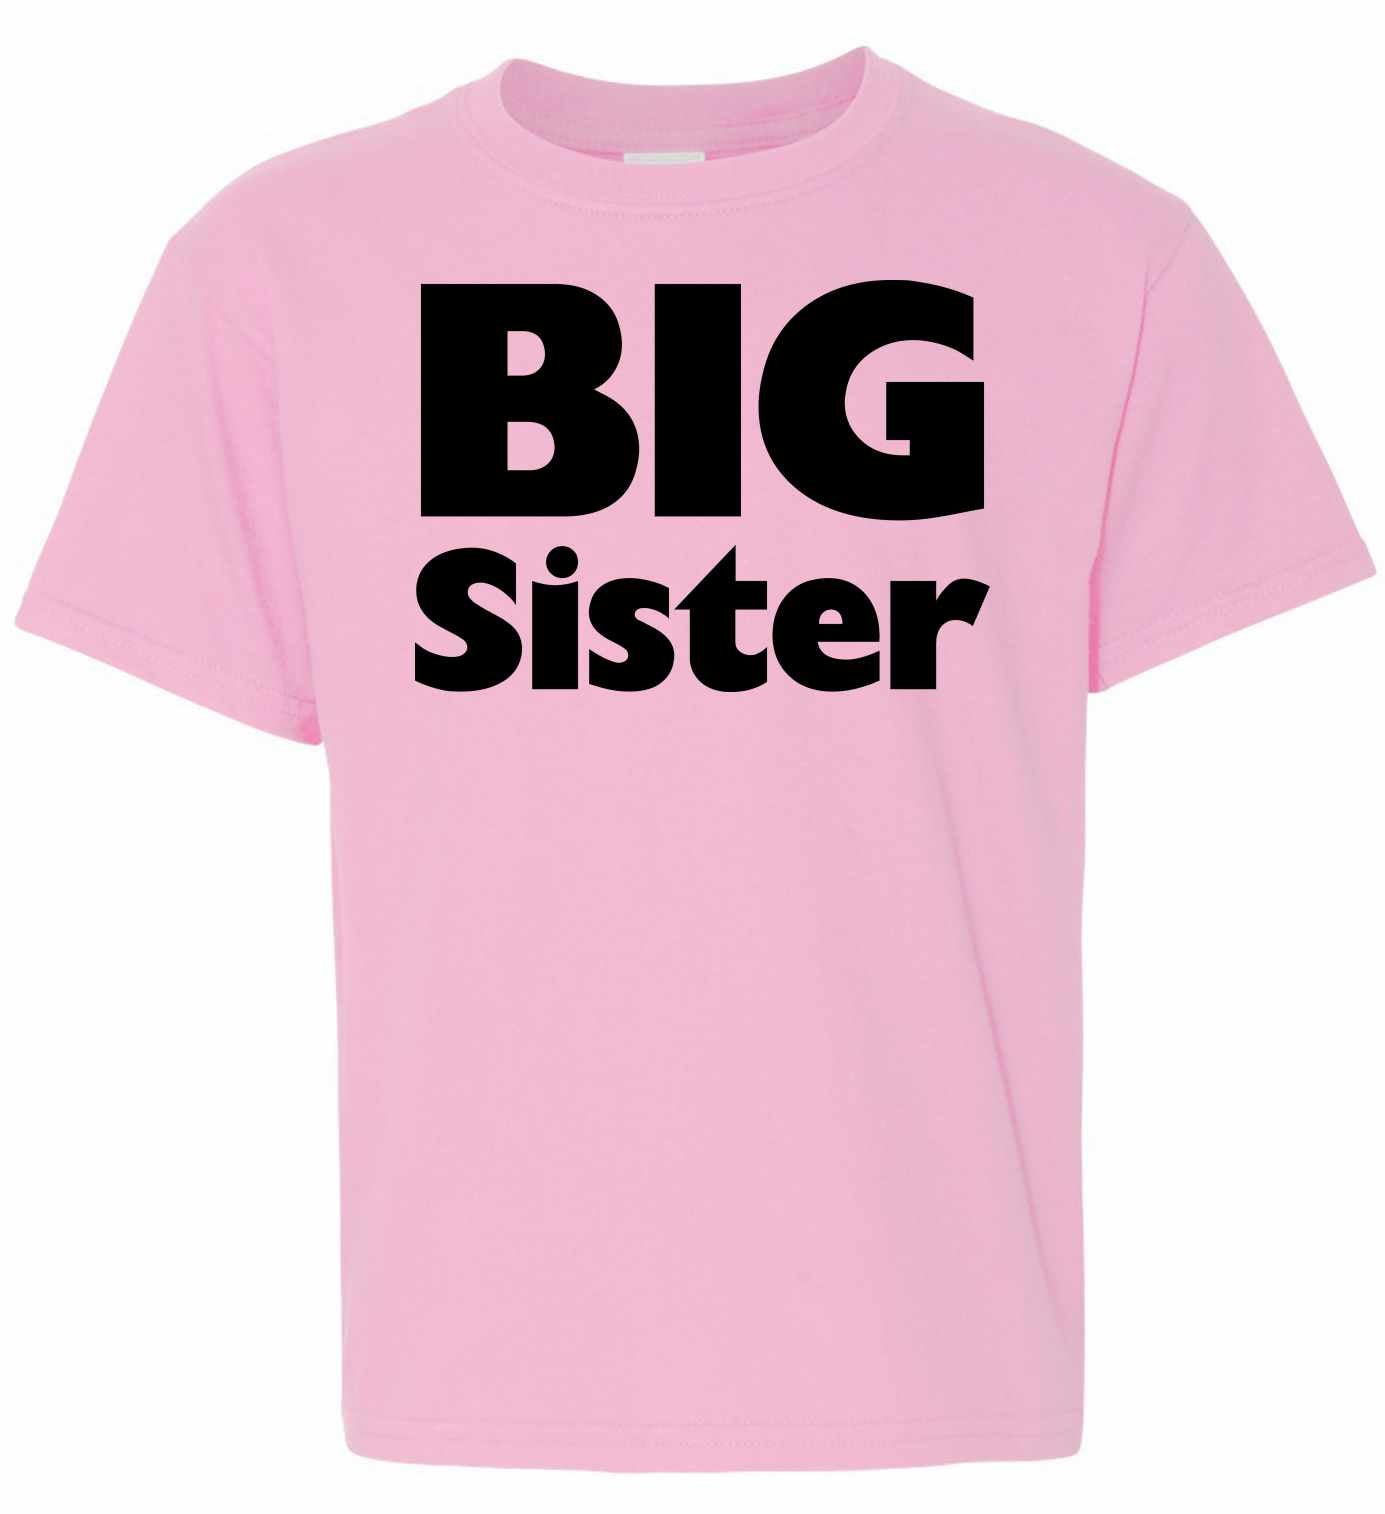 BIG SISTER on Youth T-Shirt (#874-201)